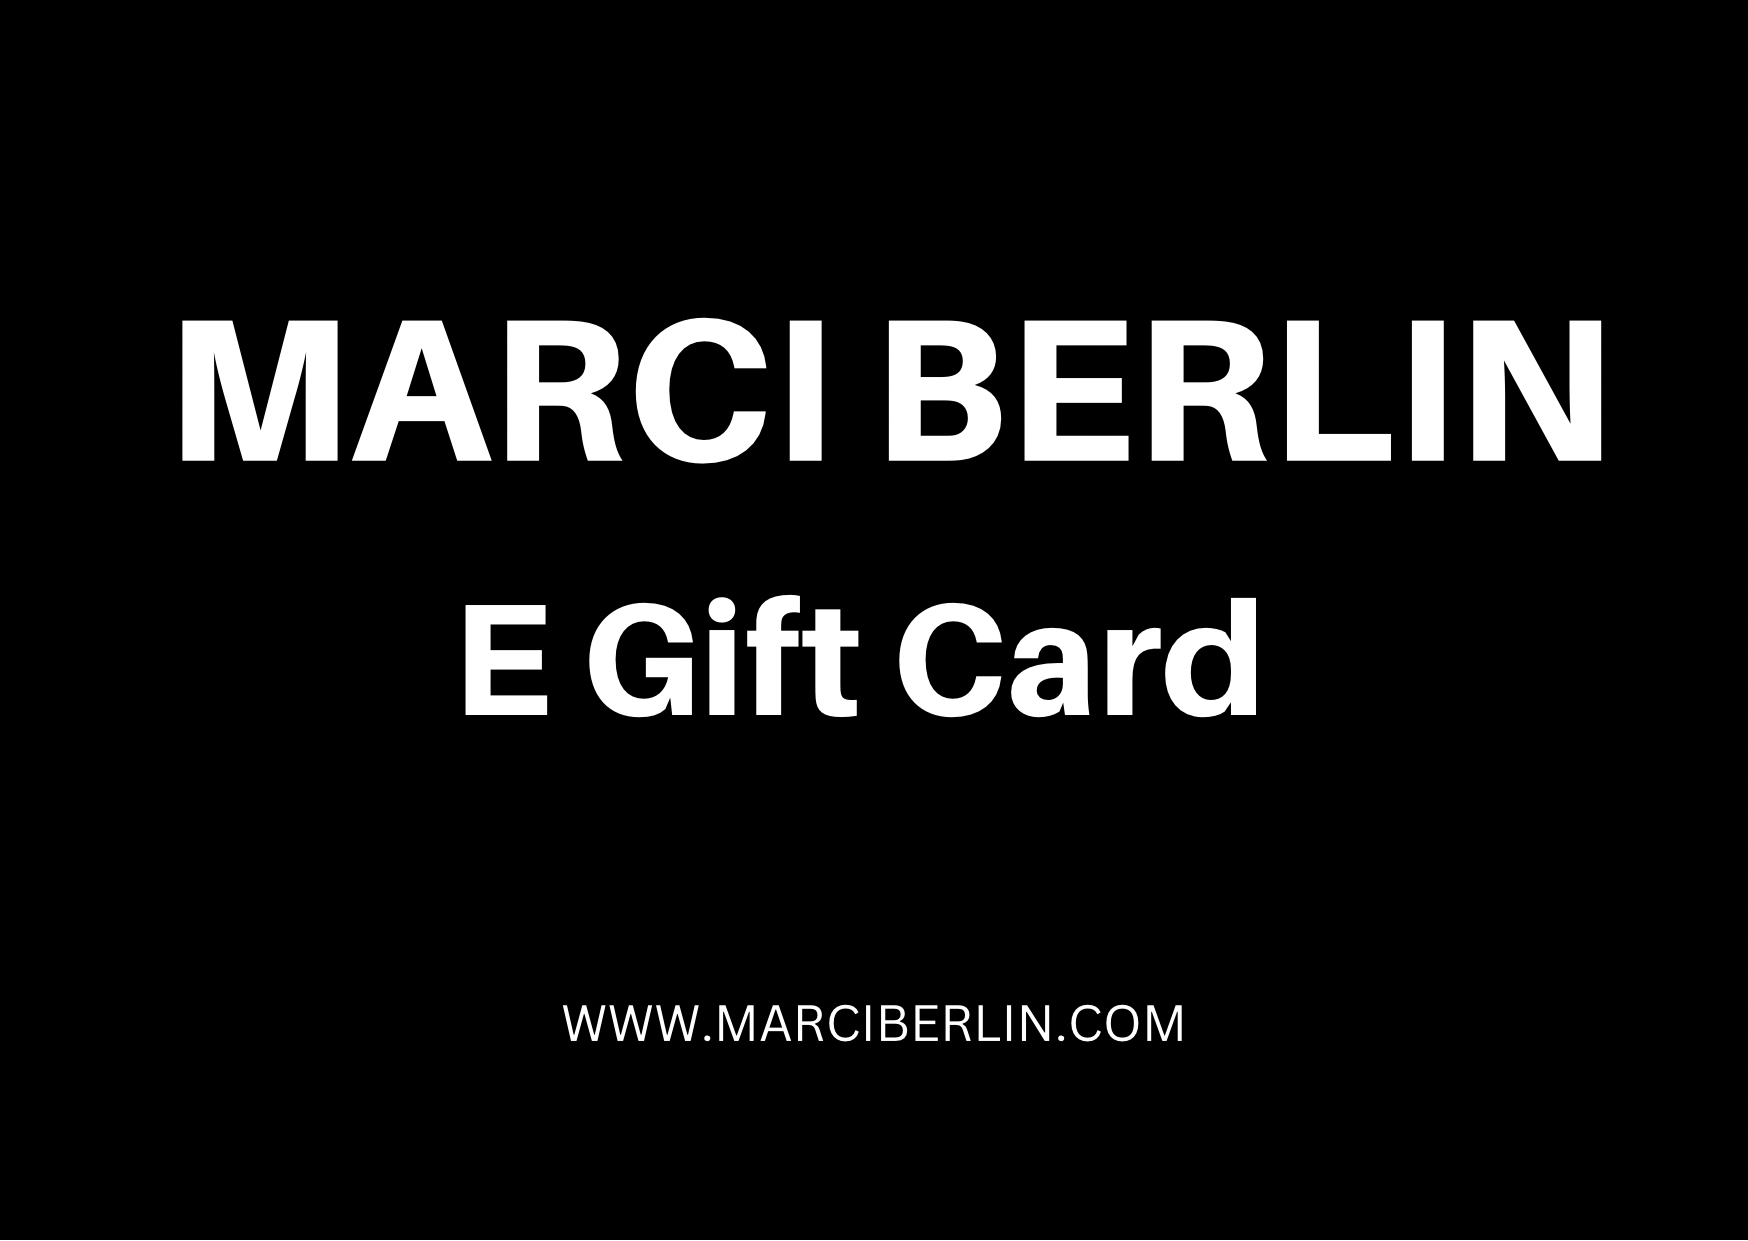 MARCI BERLIN GIFT CARD